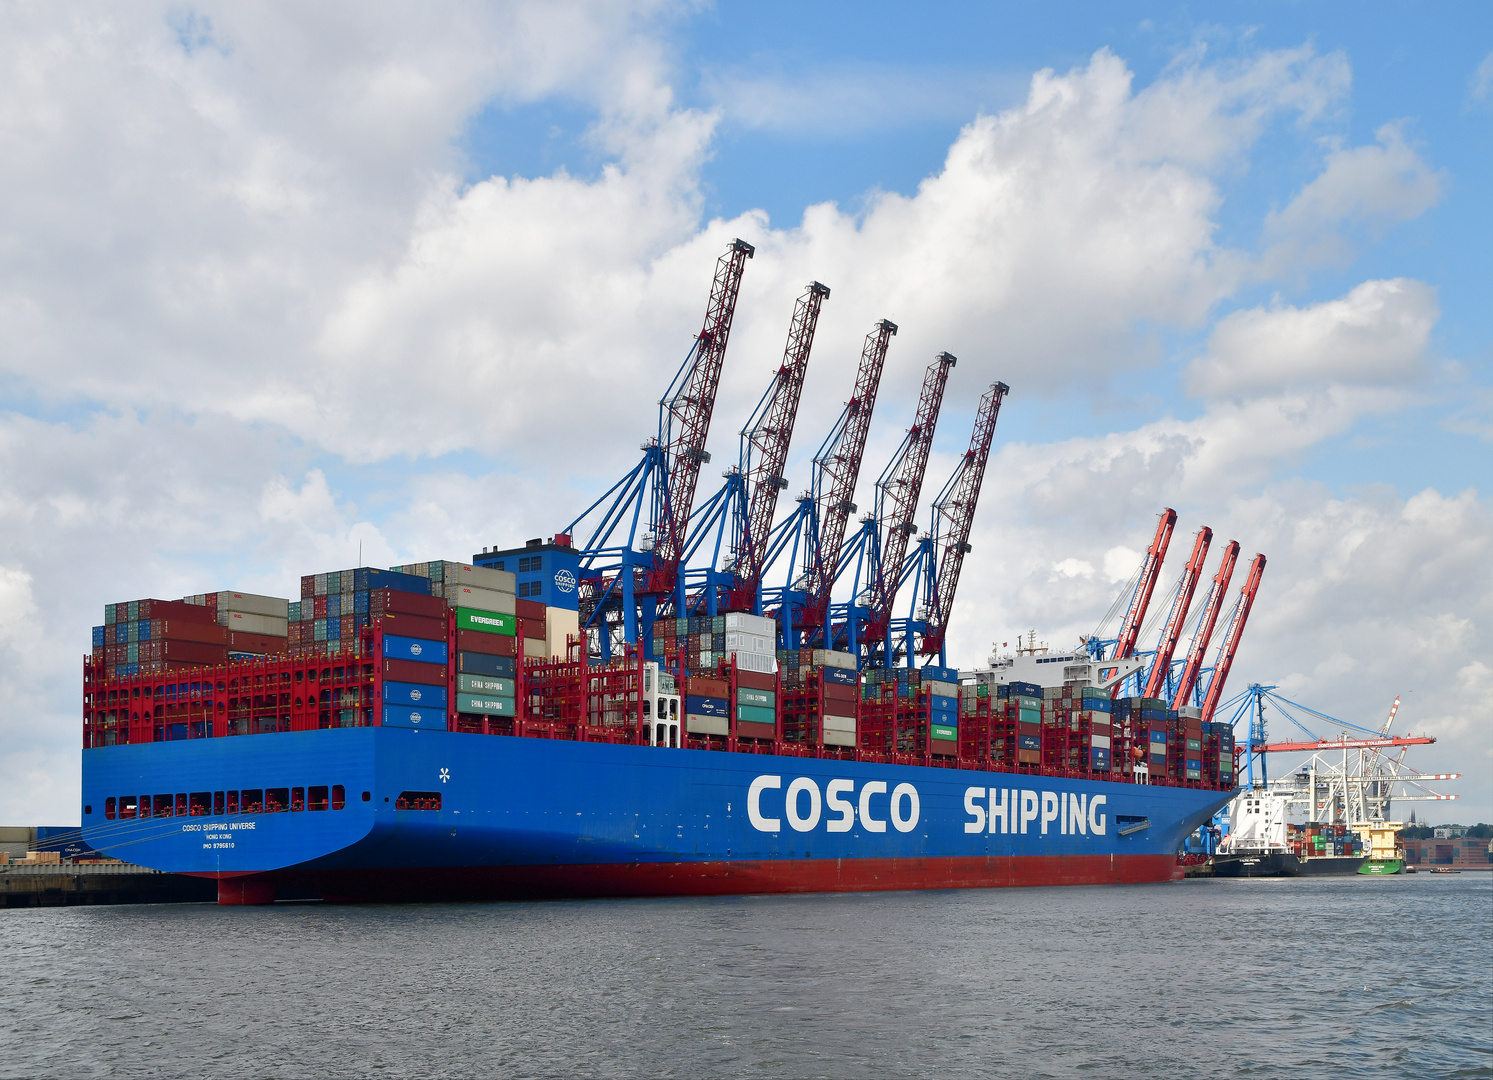 Cosco Shipping Universe in Hamburg